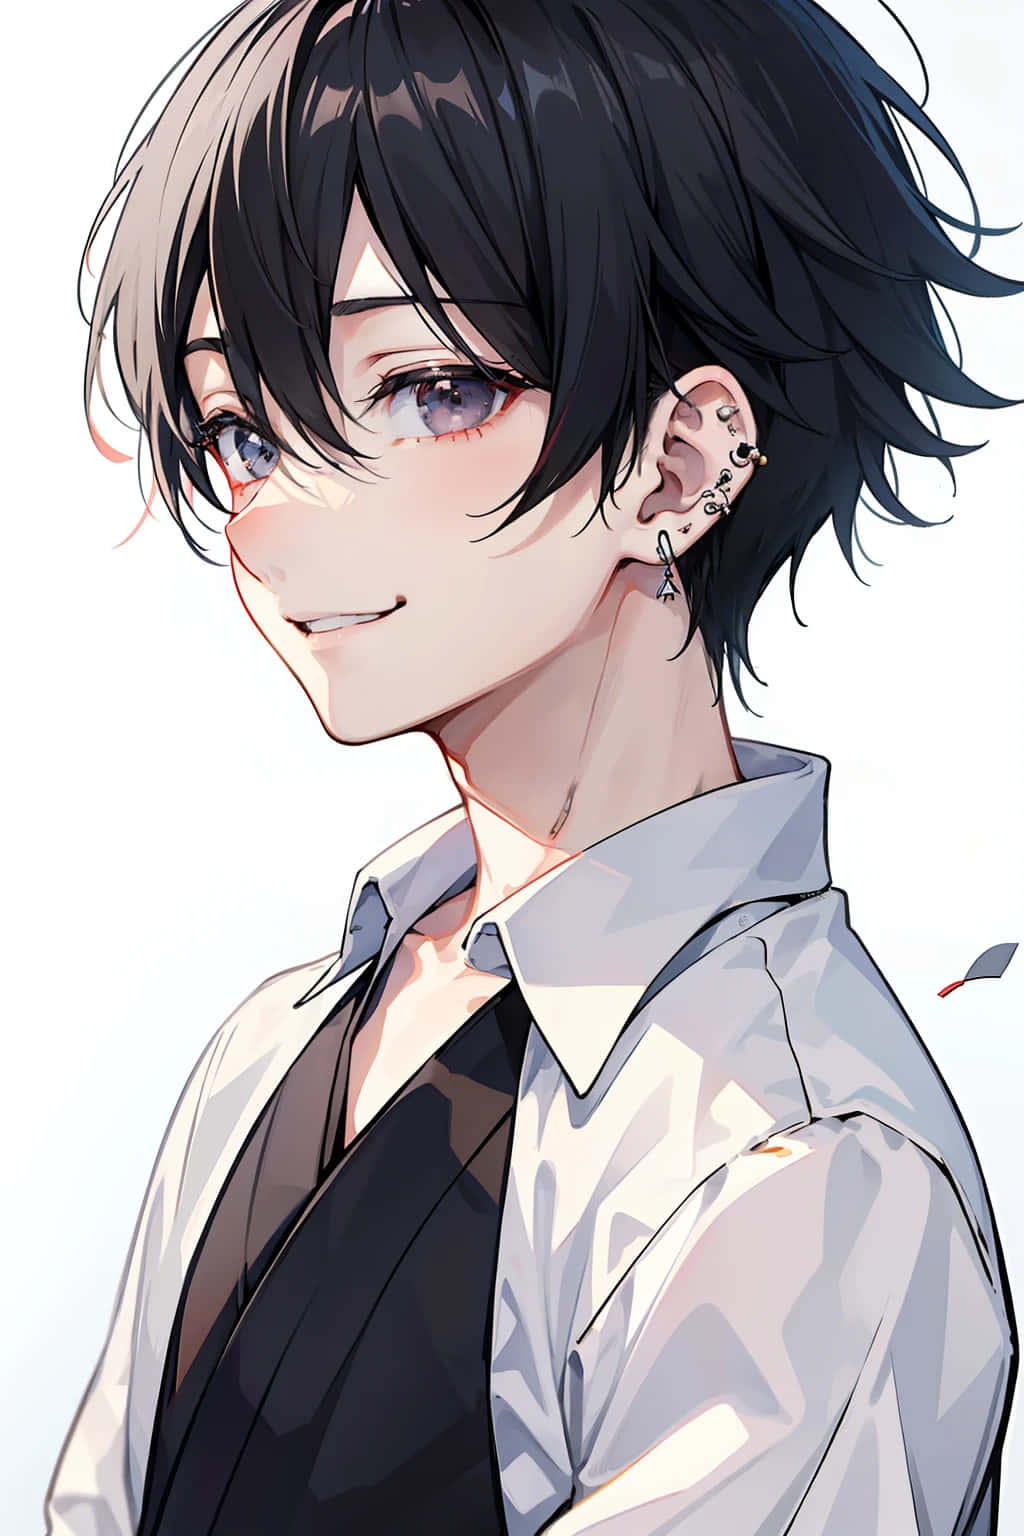 Stylish Anime Boy Black Hair Wallpaper